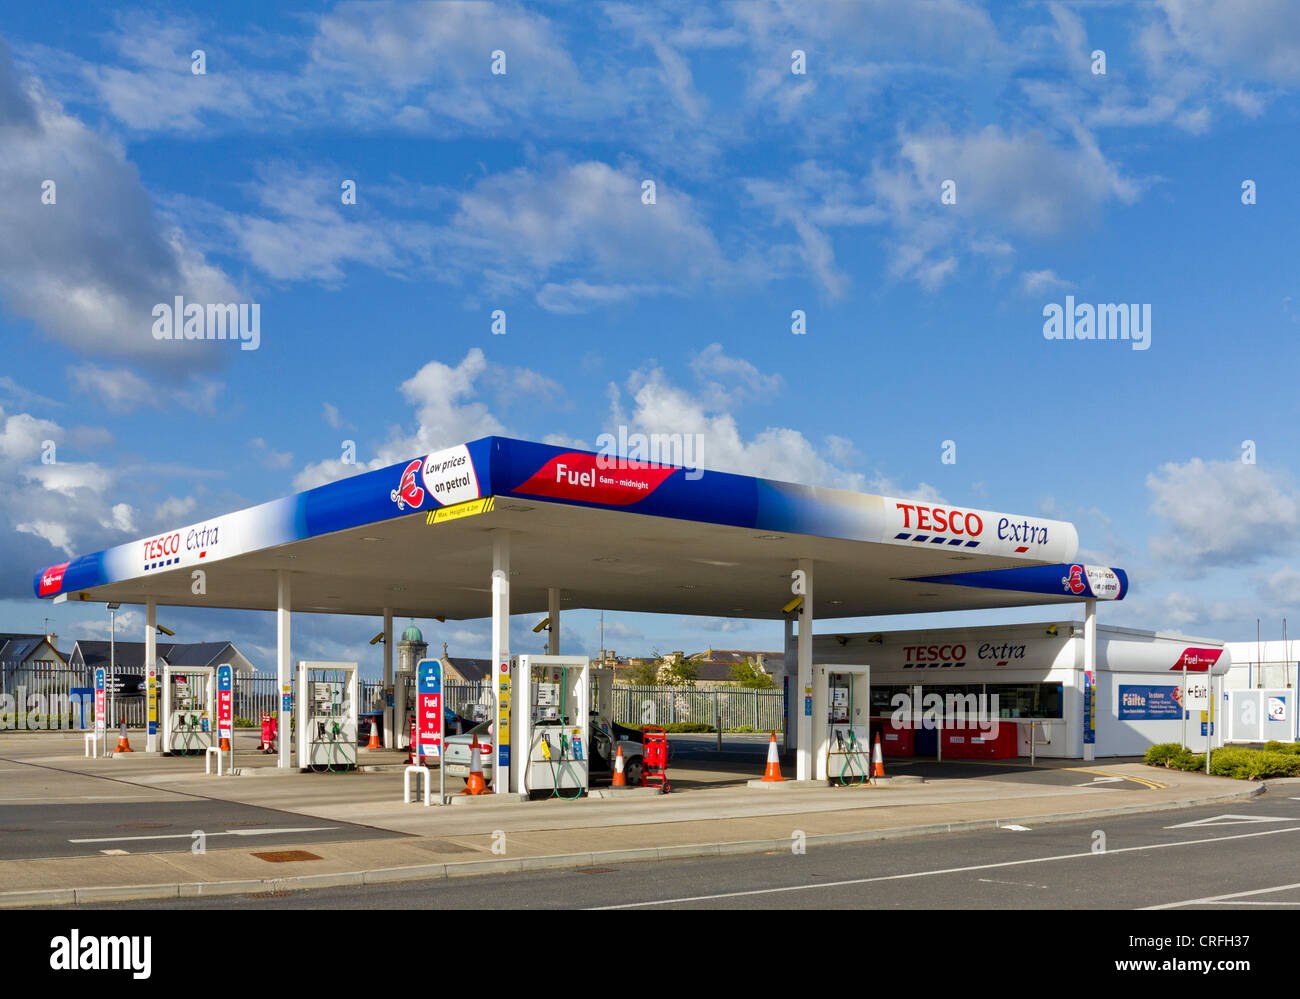 La gasolinera Tesco, REINO UNIDO Foto de stock